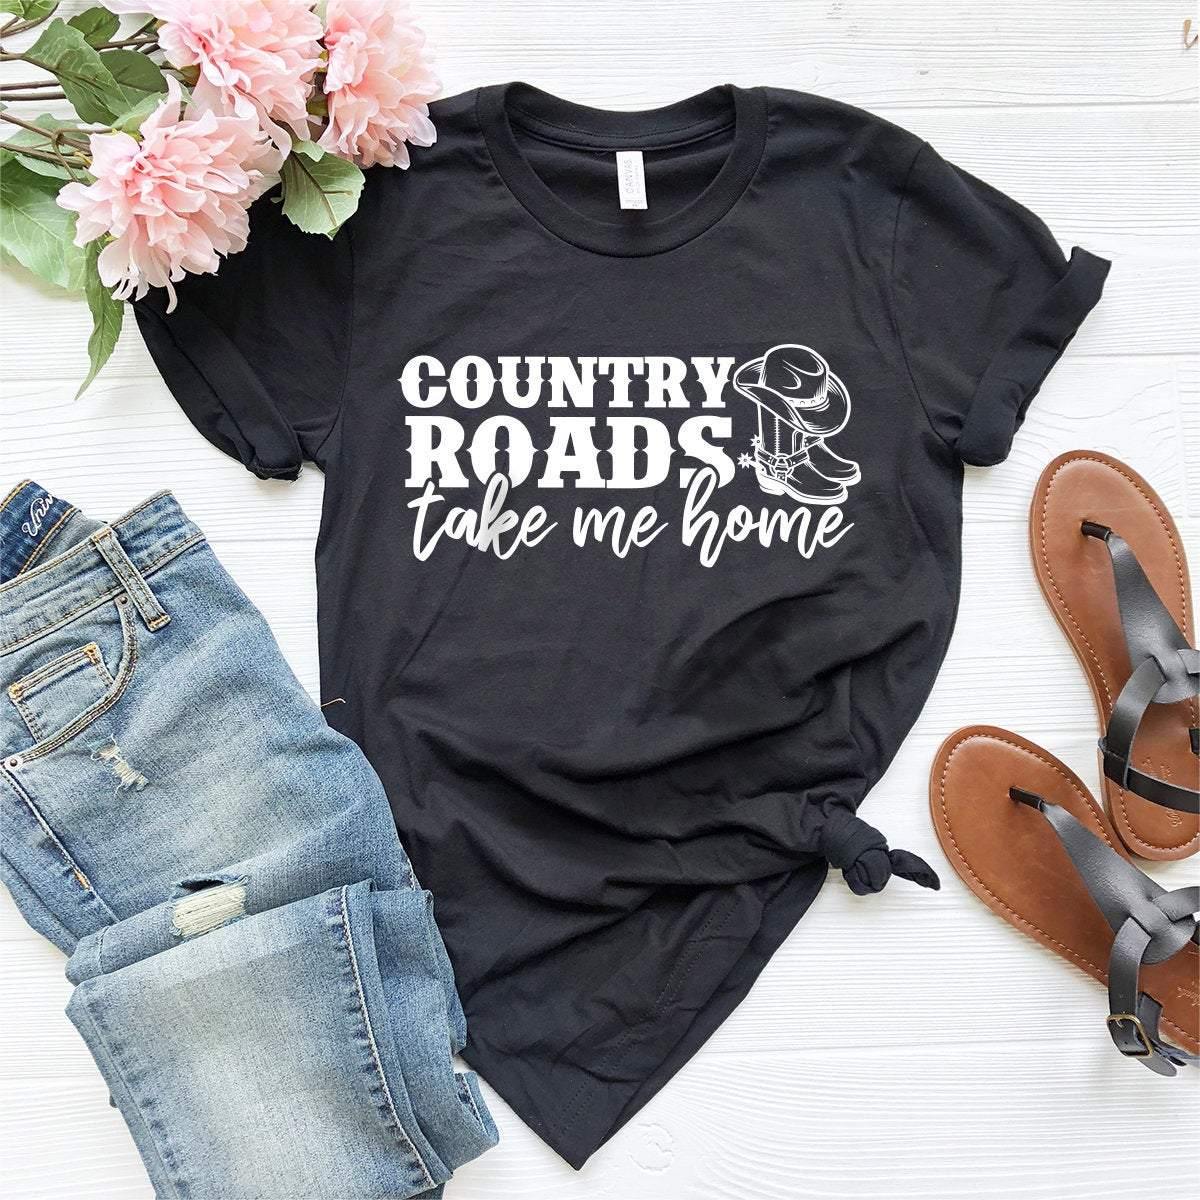 Country Girl Shirt, Western Girl Shirt, Cowgirl Boots Shirt, Southern Girl Shirt, Country Roads Take Me Home Shirt, Southern T-Shirt - Fastdeliverytees.com